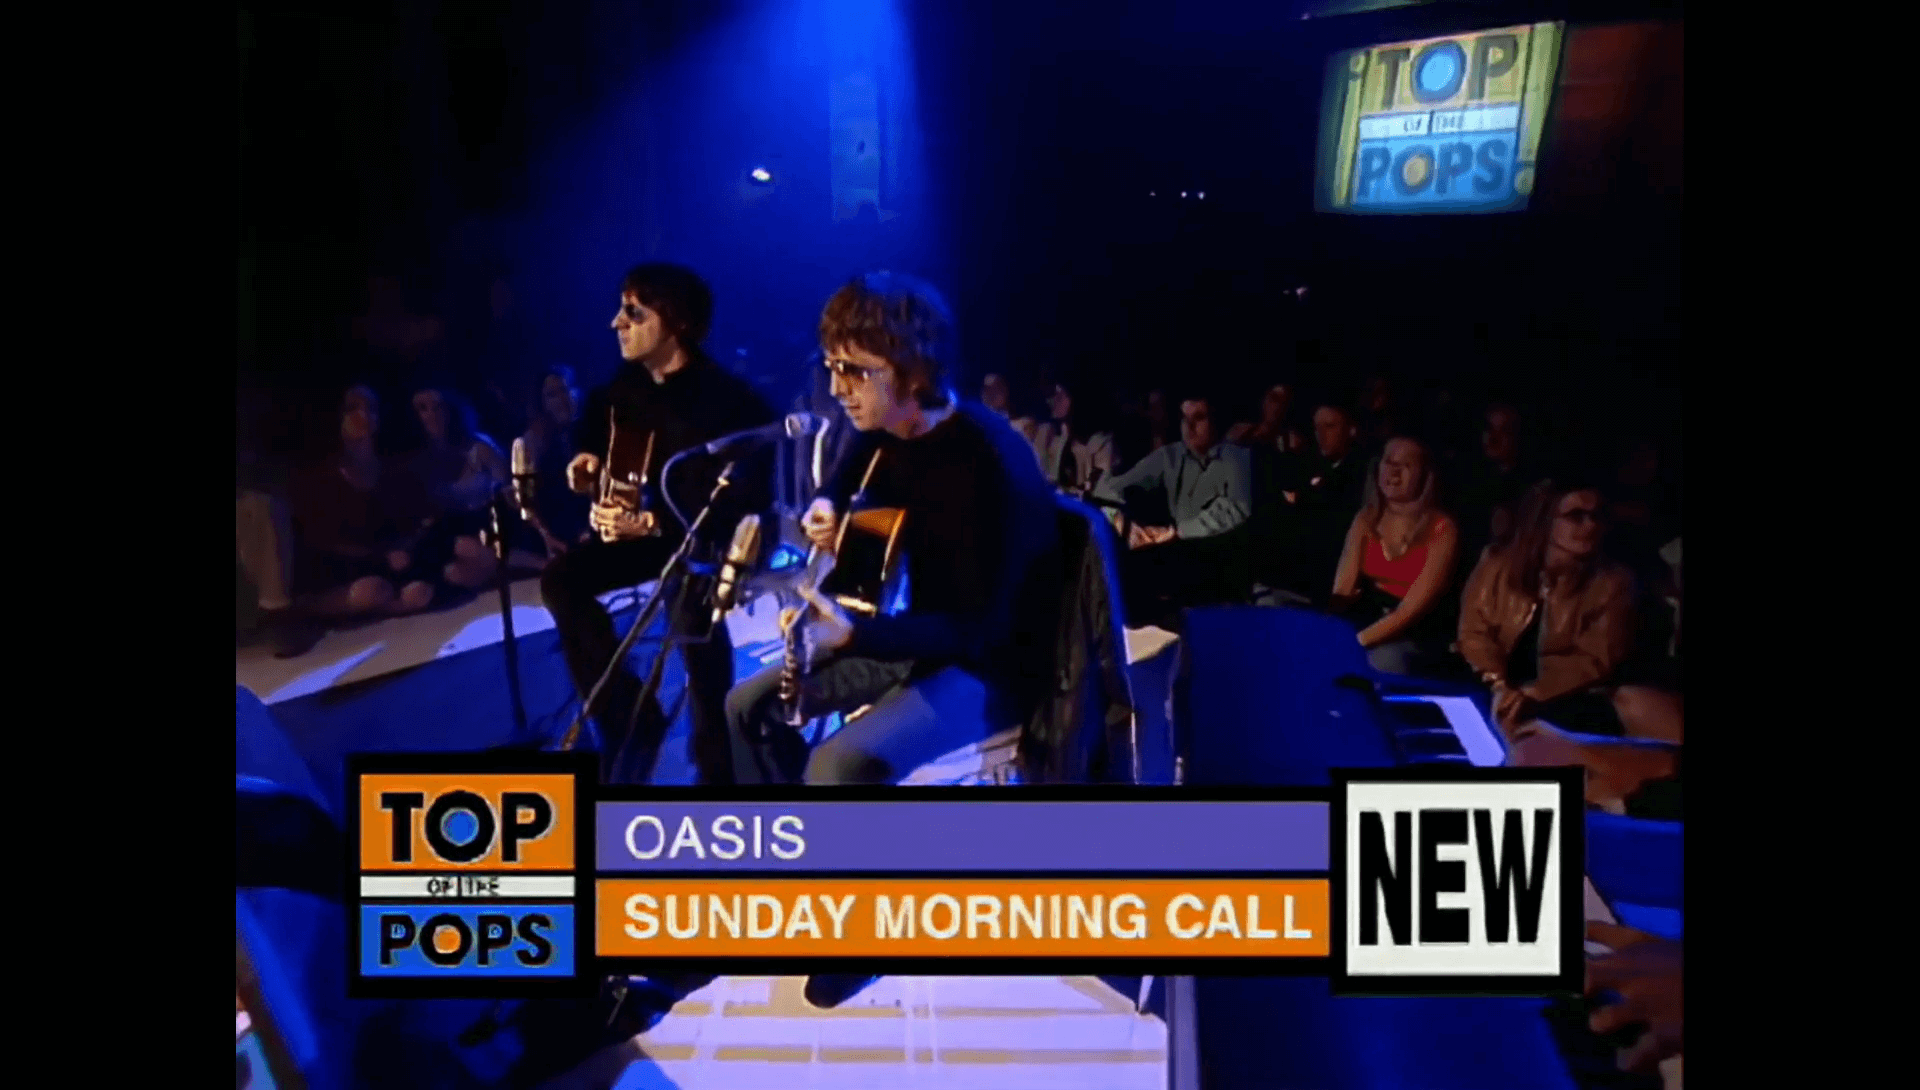 Oasis at Elstree Studios - May 22, 2000